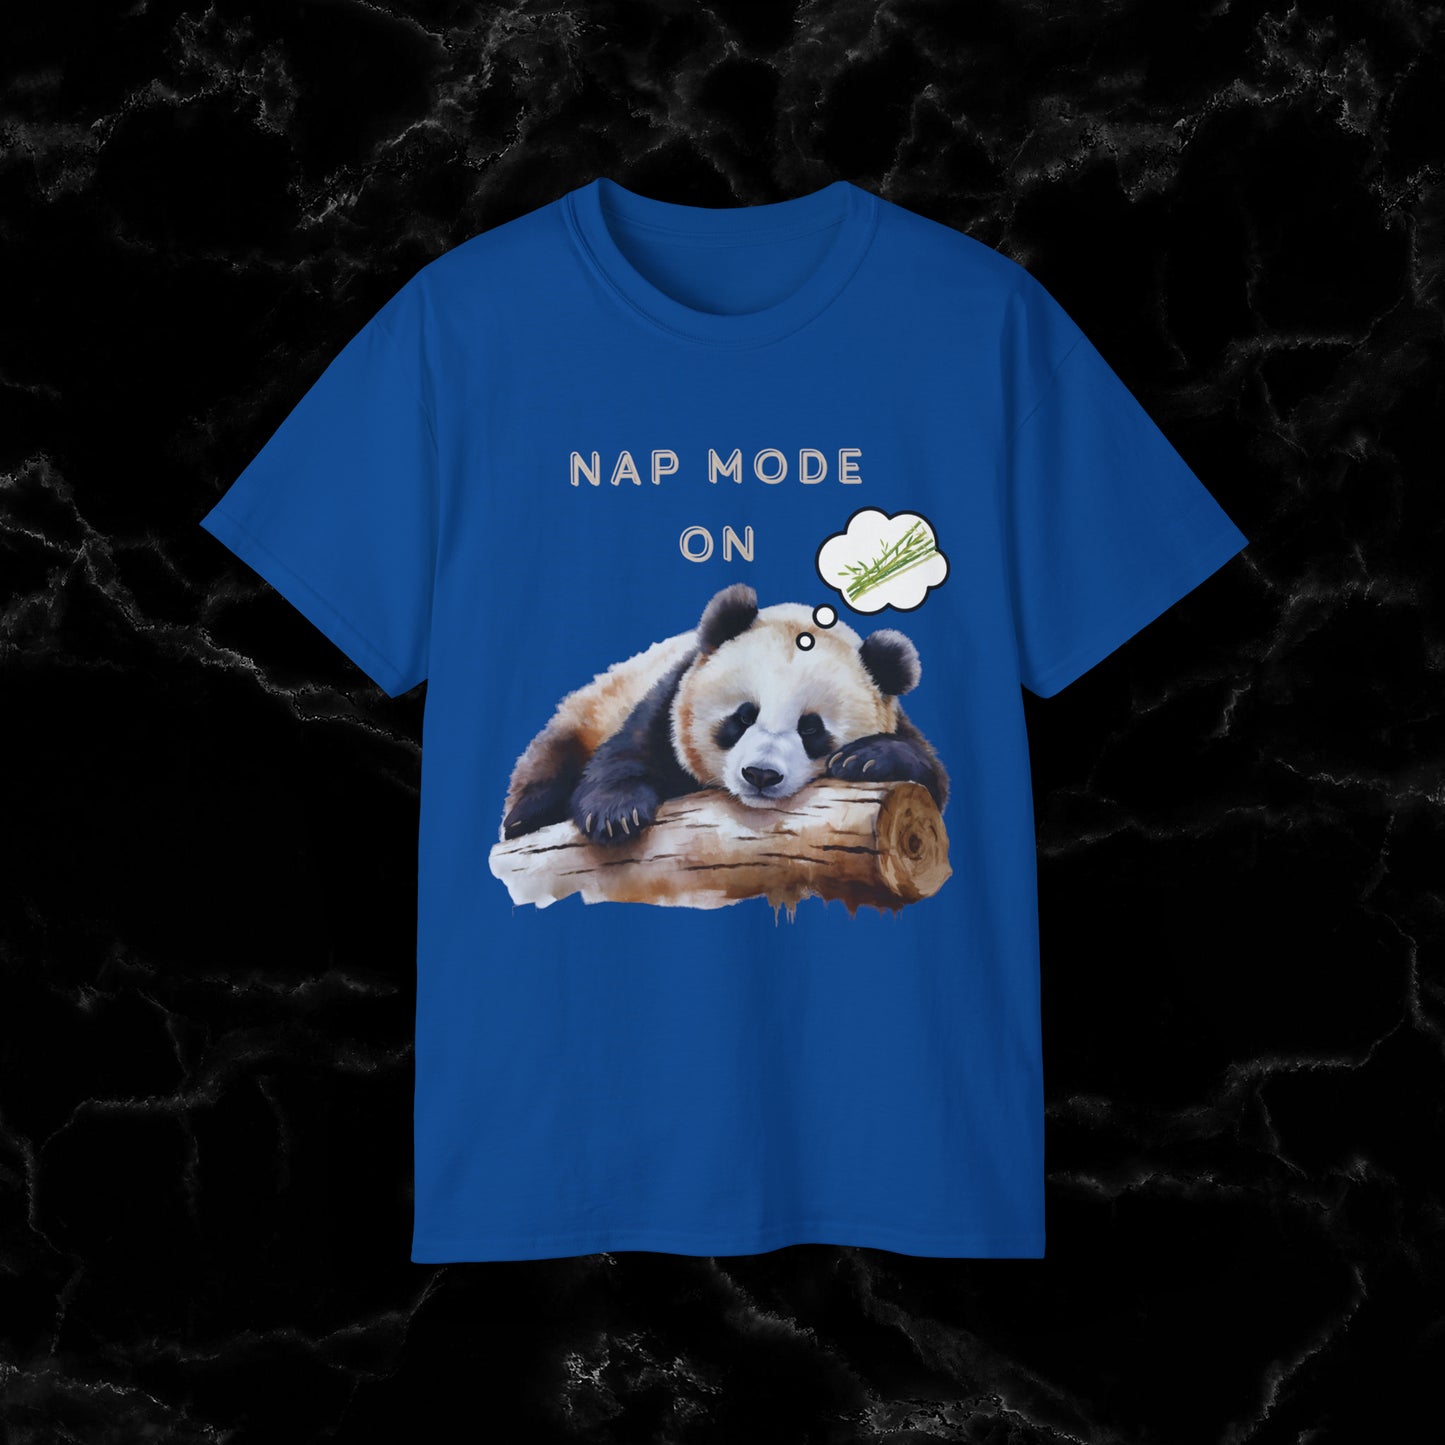 Nap Time Panda Unisex Funny Tee - Hilarious Panda Nap Mode On T-Shirt Royal L 